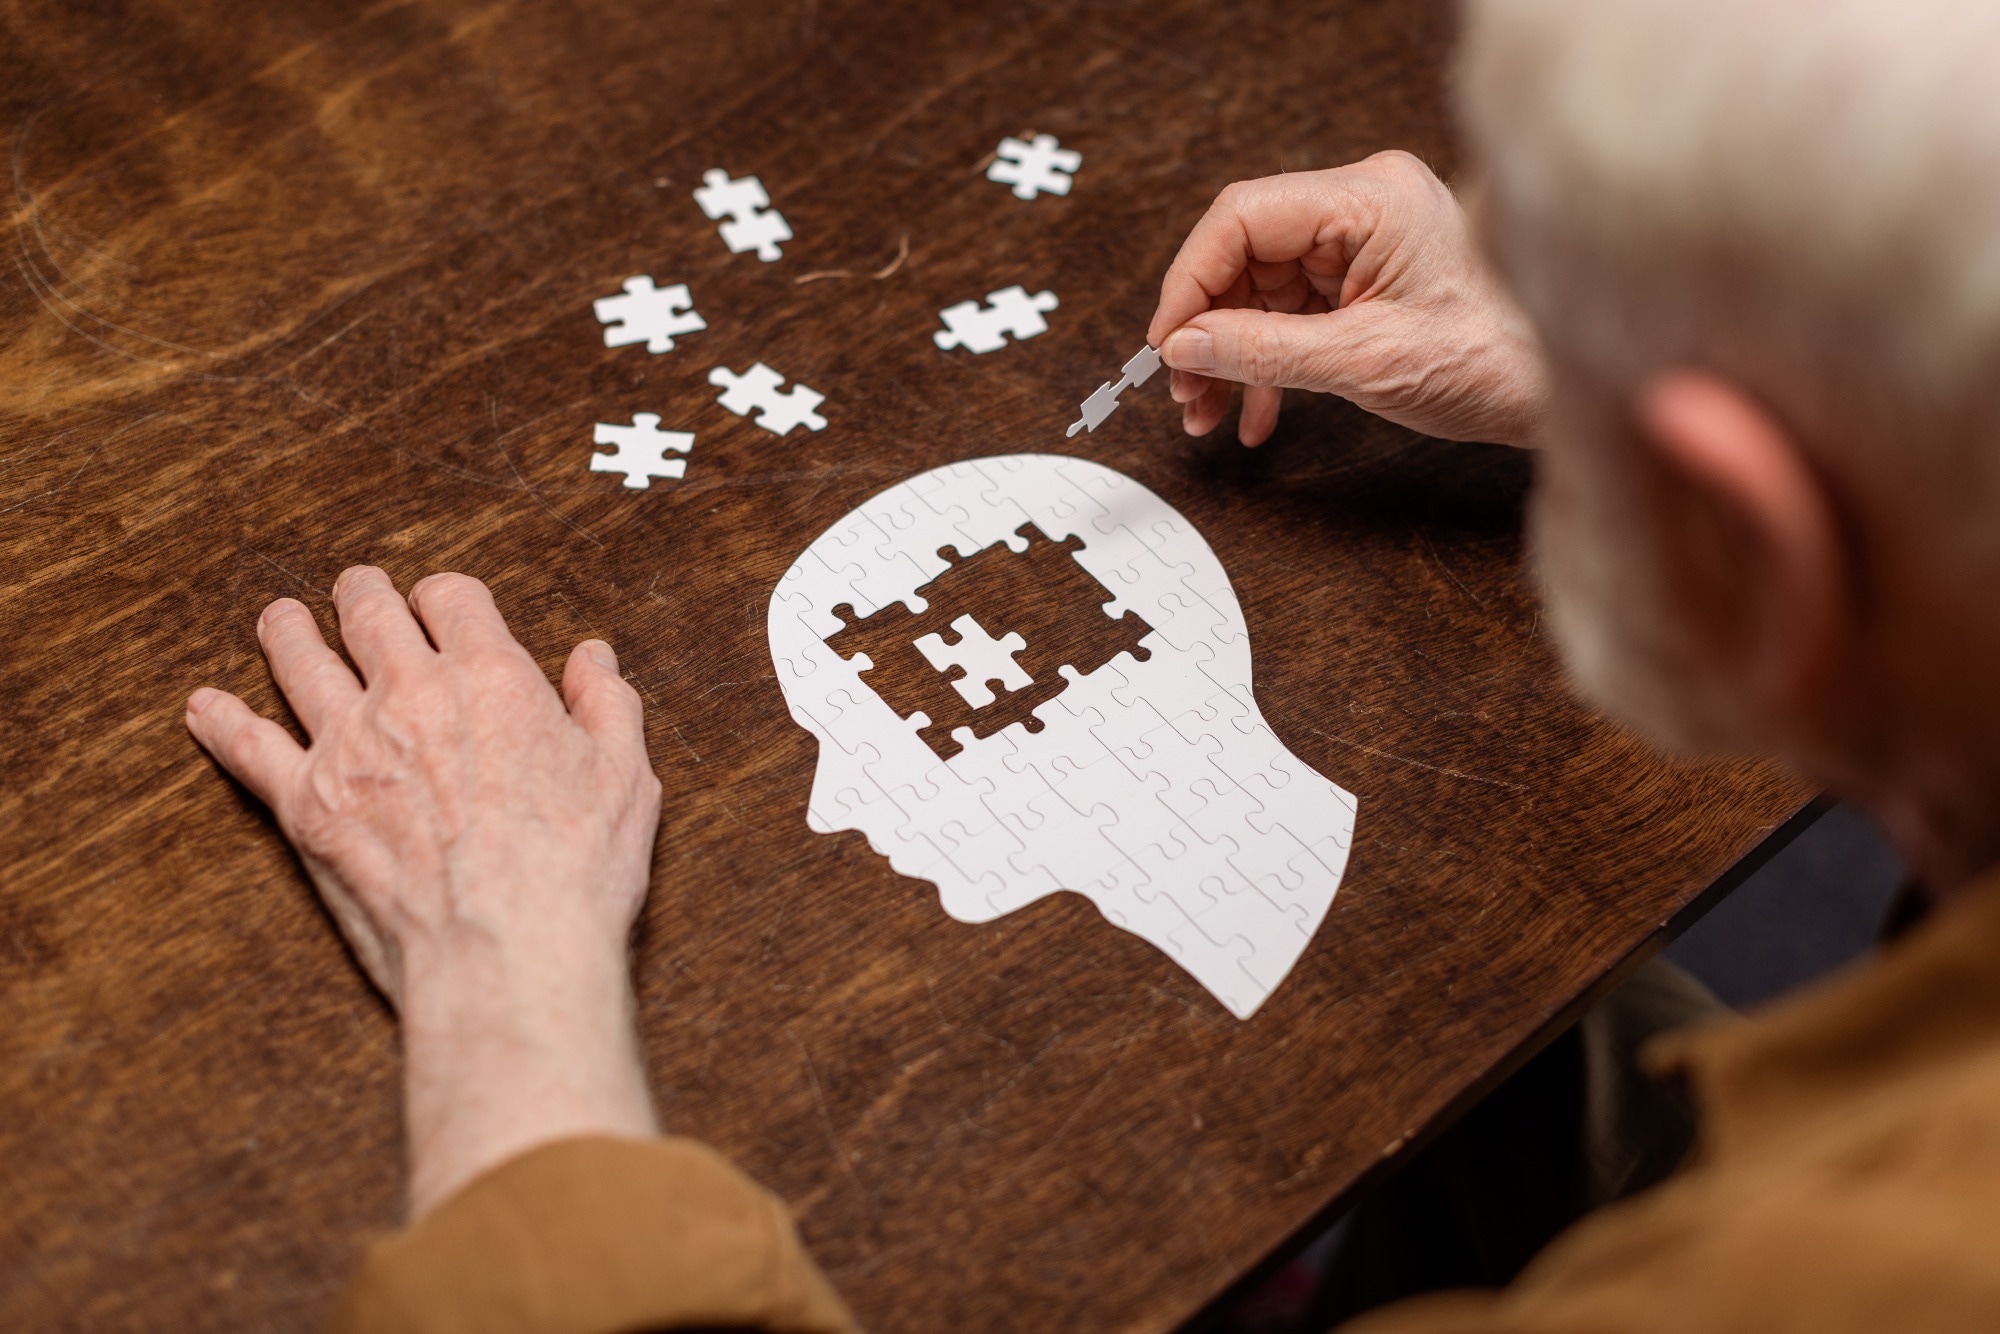 Study: Posttraumatic Epilepsy and Dementia Risk. Image Credit: LightField Studios/Shutterstock.com